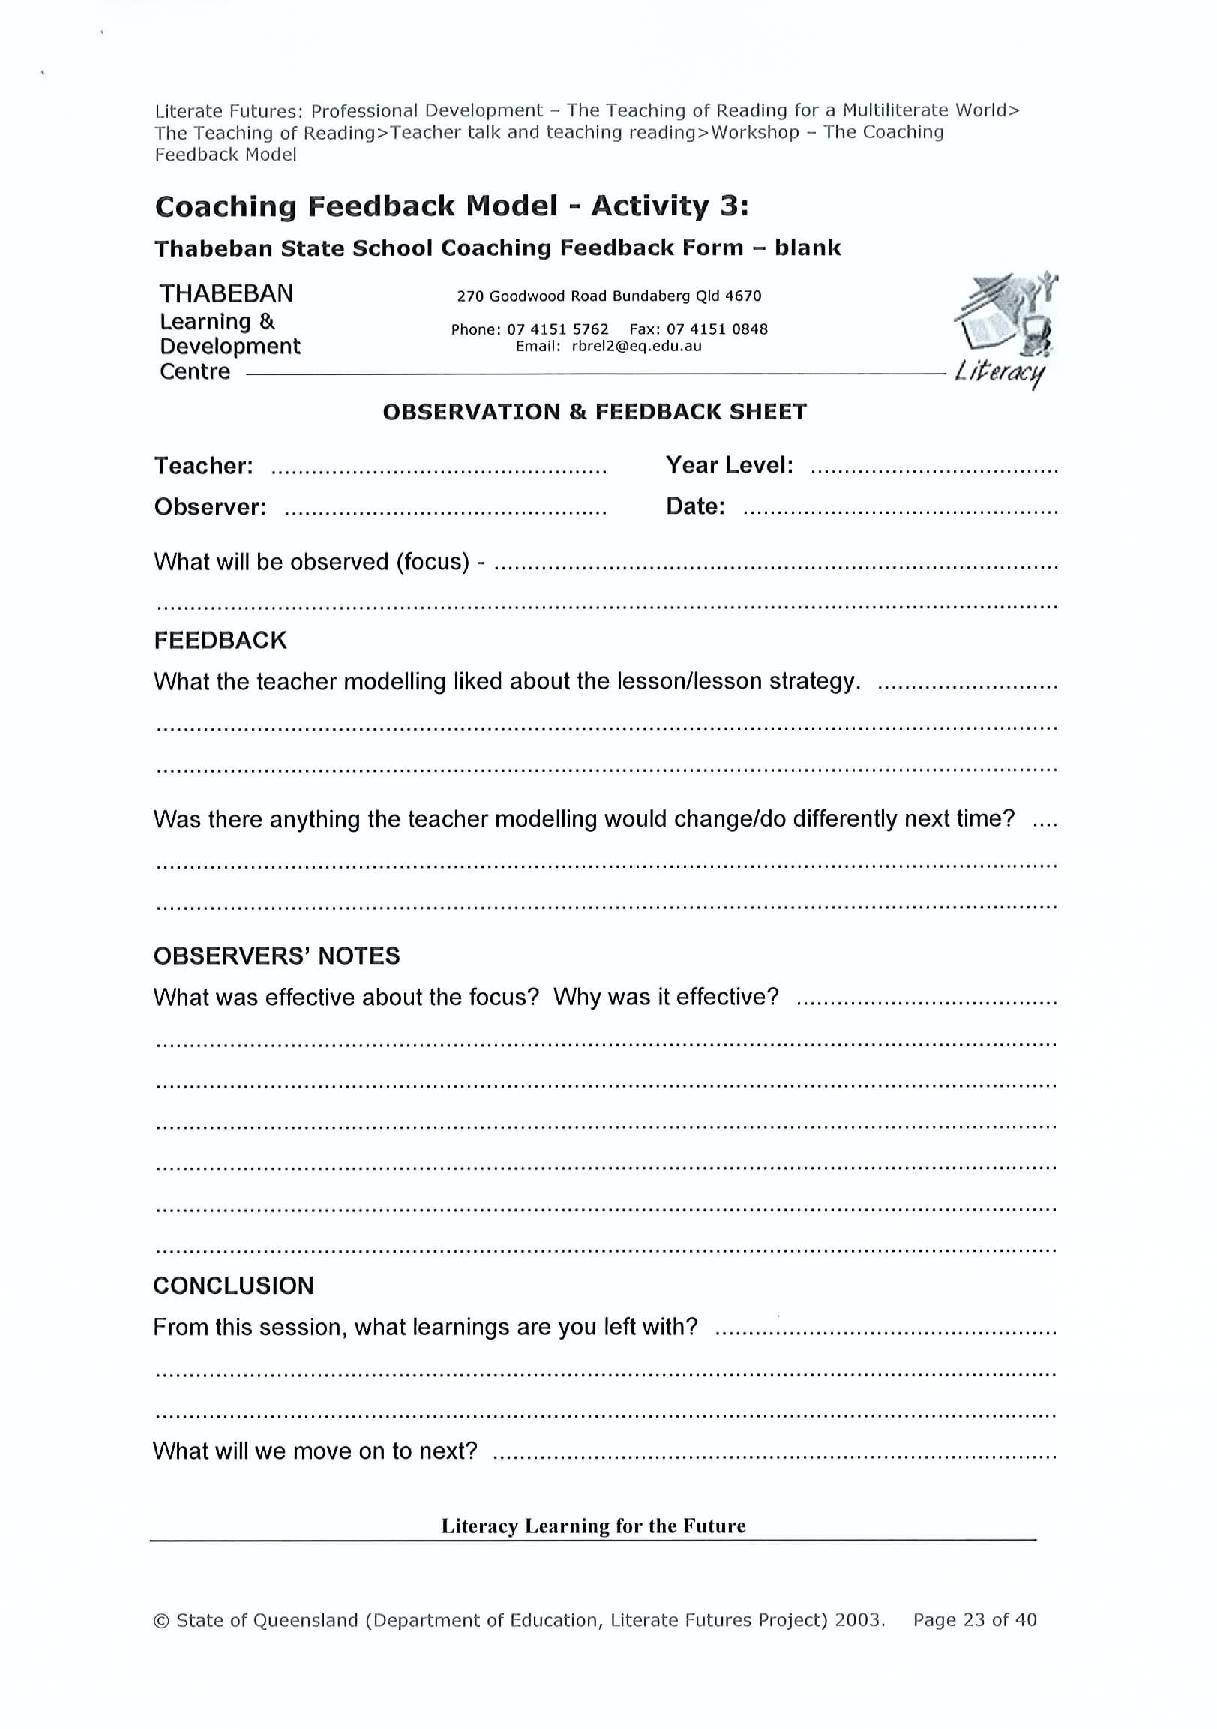 thebeban ss feedback form page 001